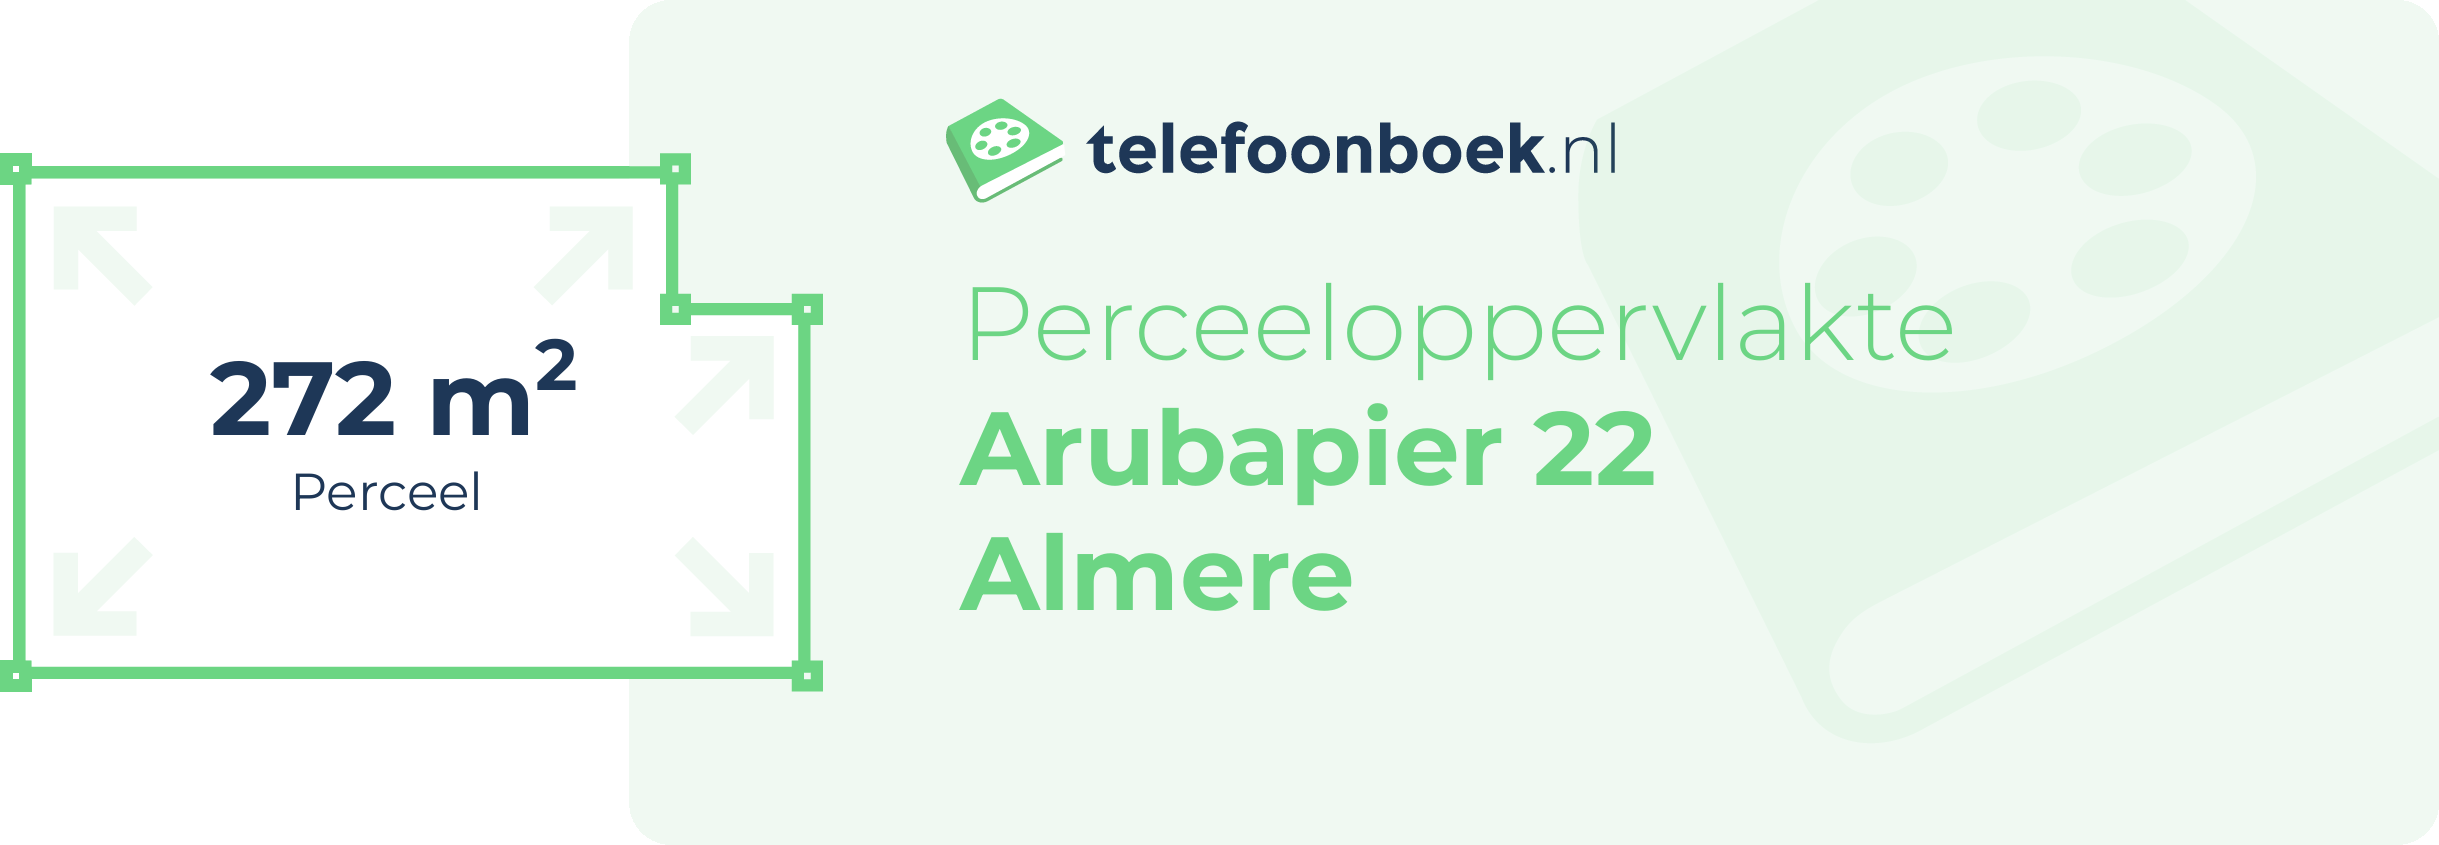 Perceeloppervlakte Arubapier 22 Almere